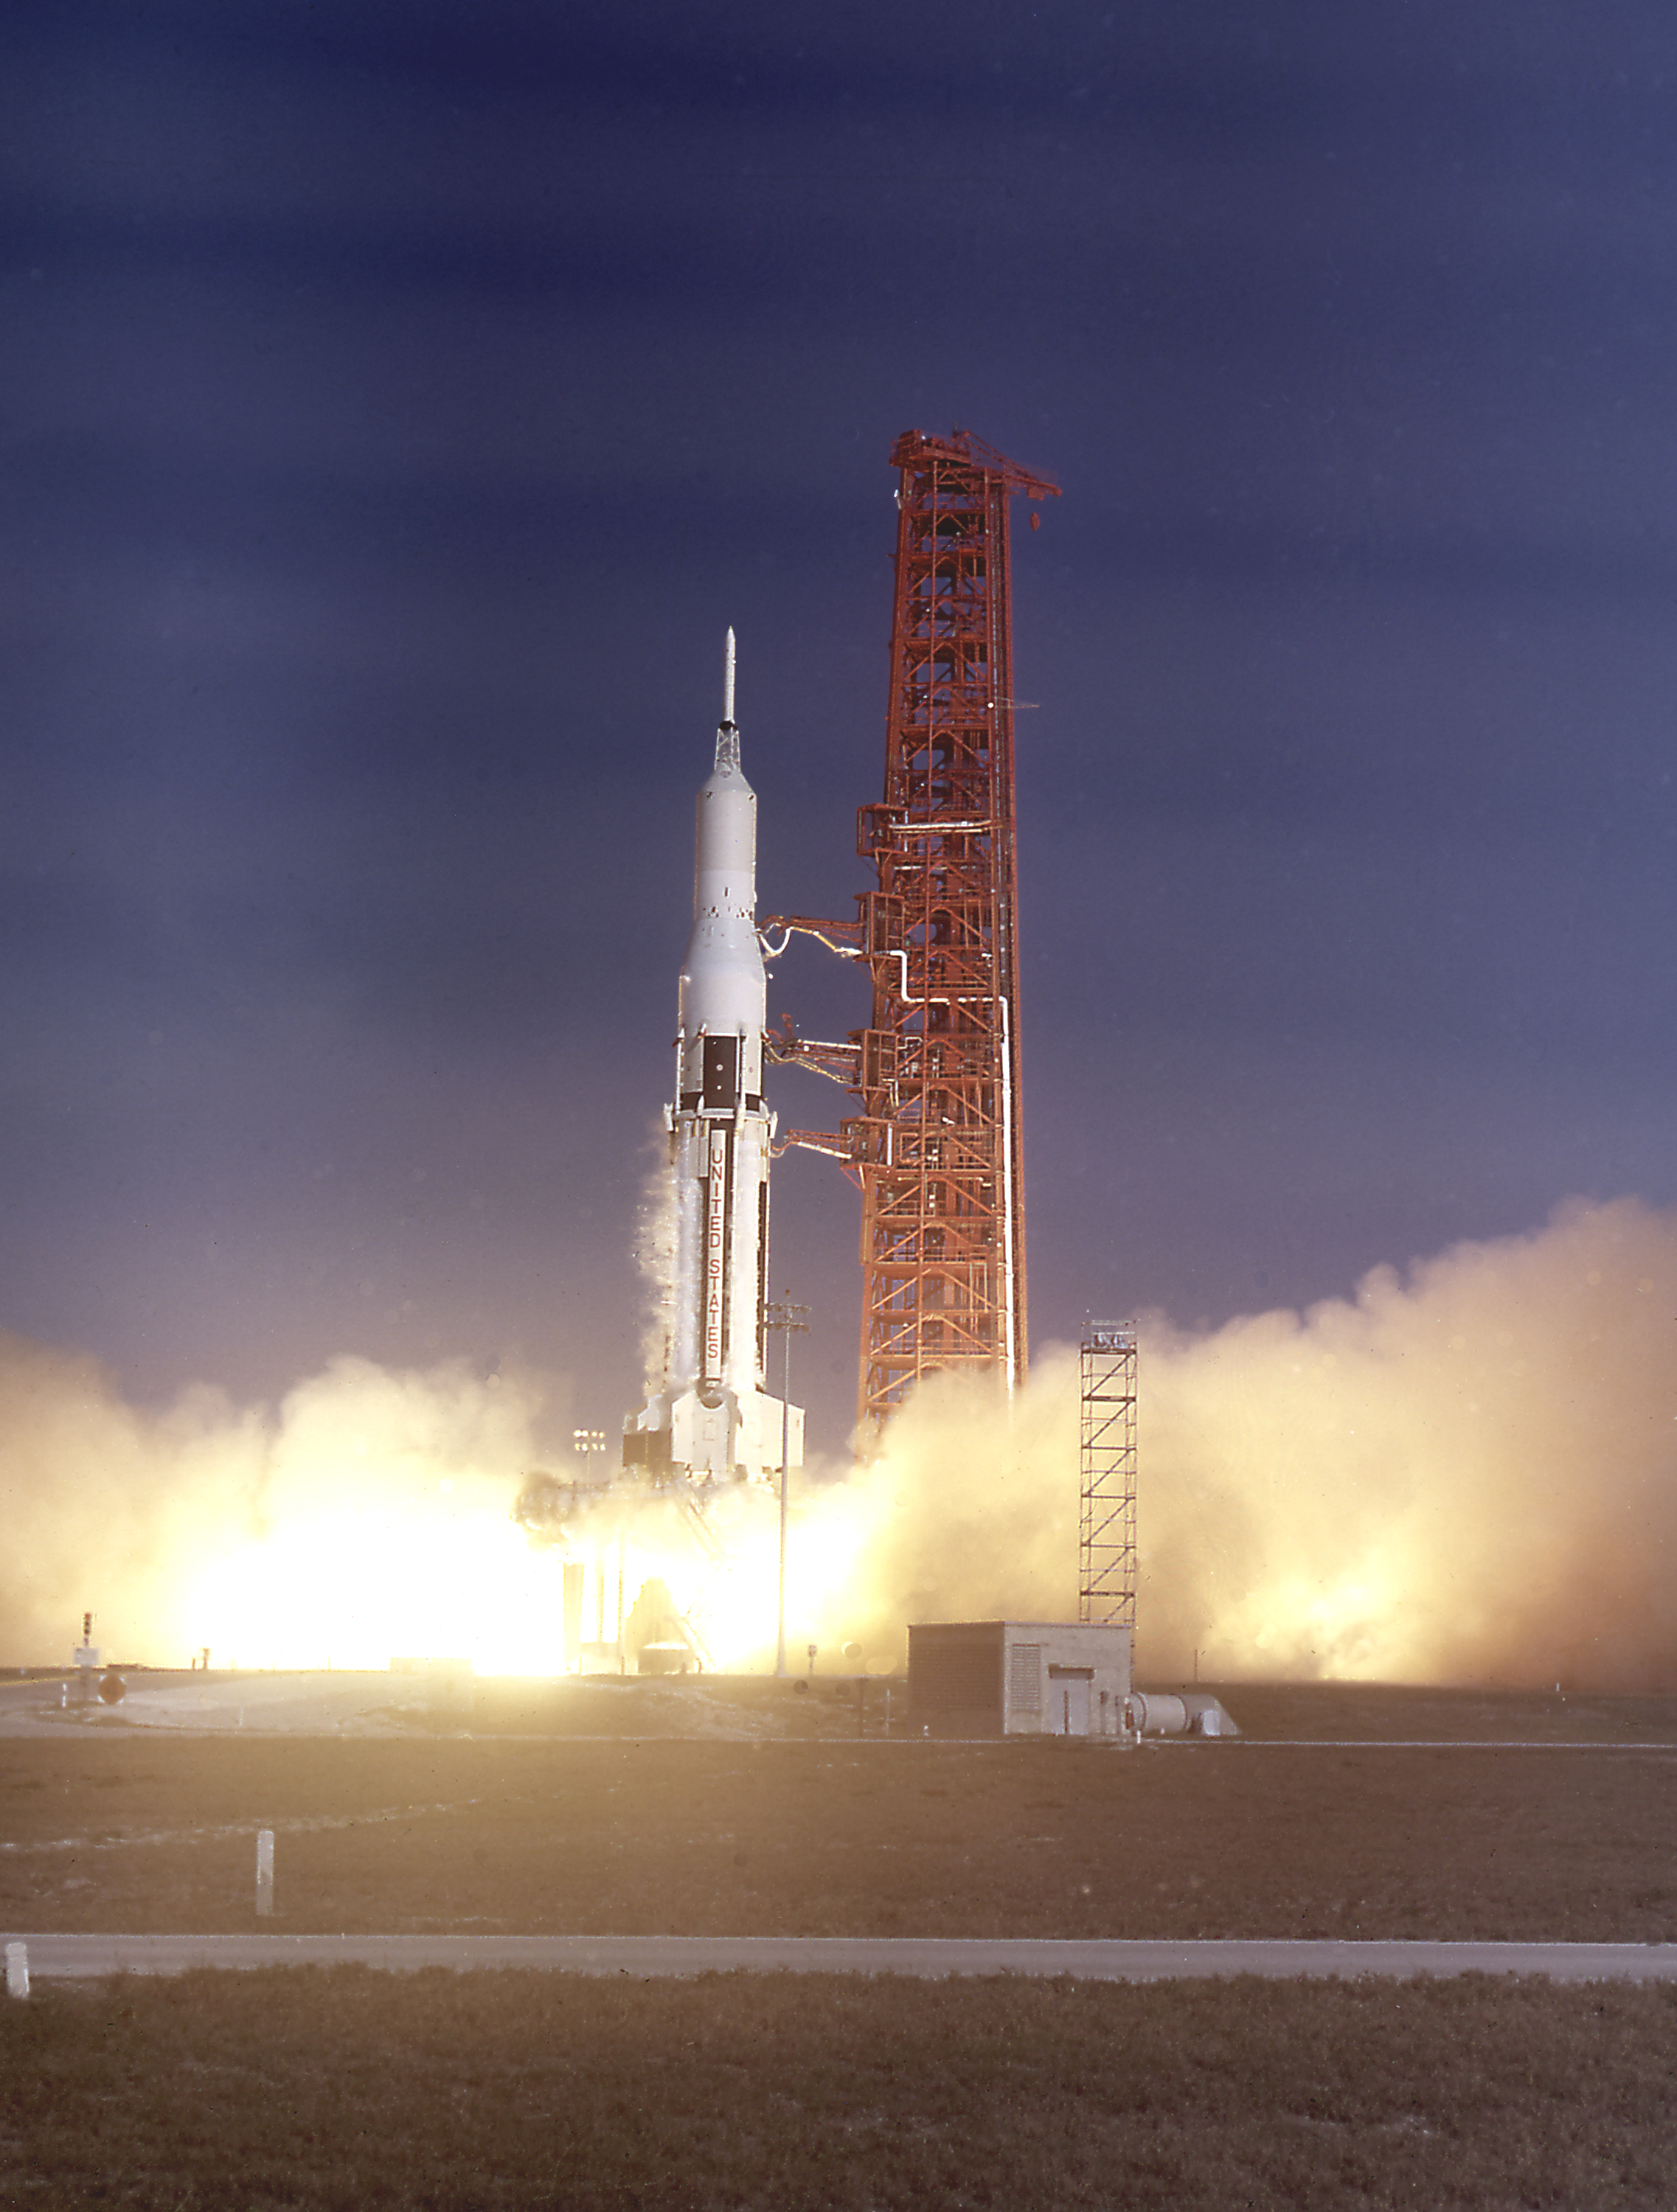 File:Saturn SA9 launch.jpg - Wikimedia Commons